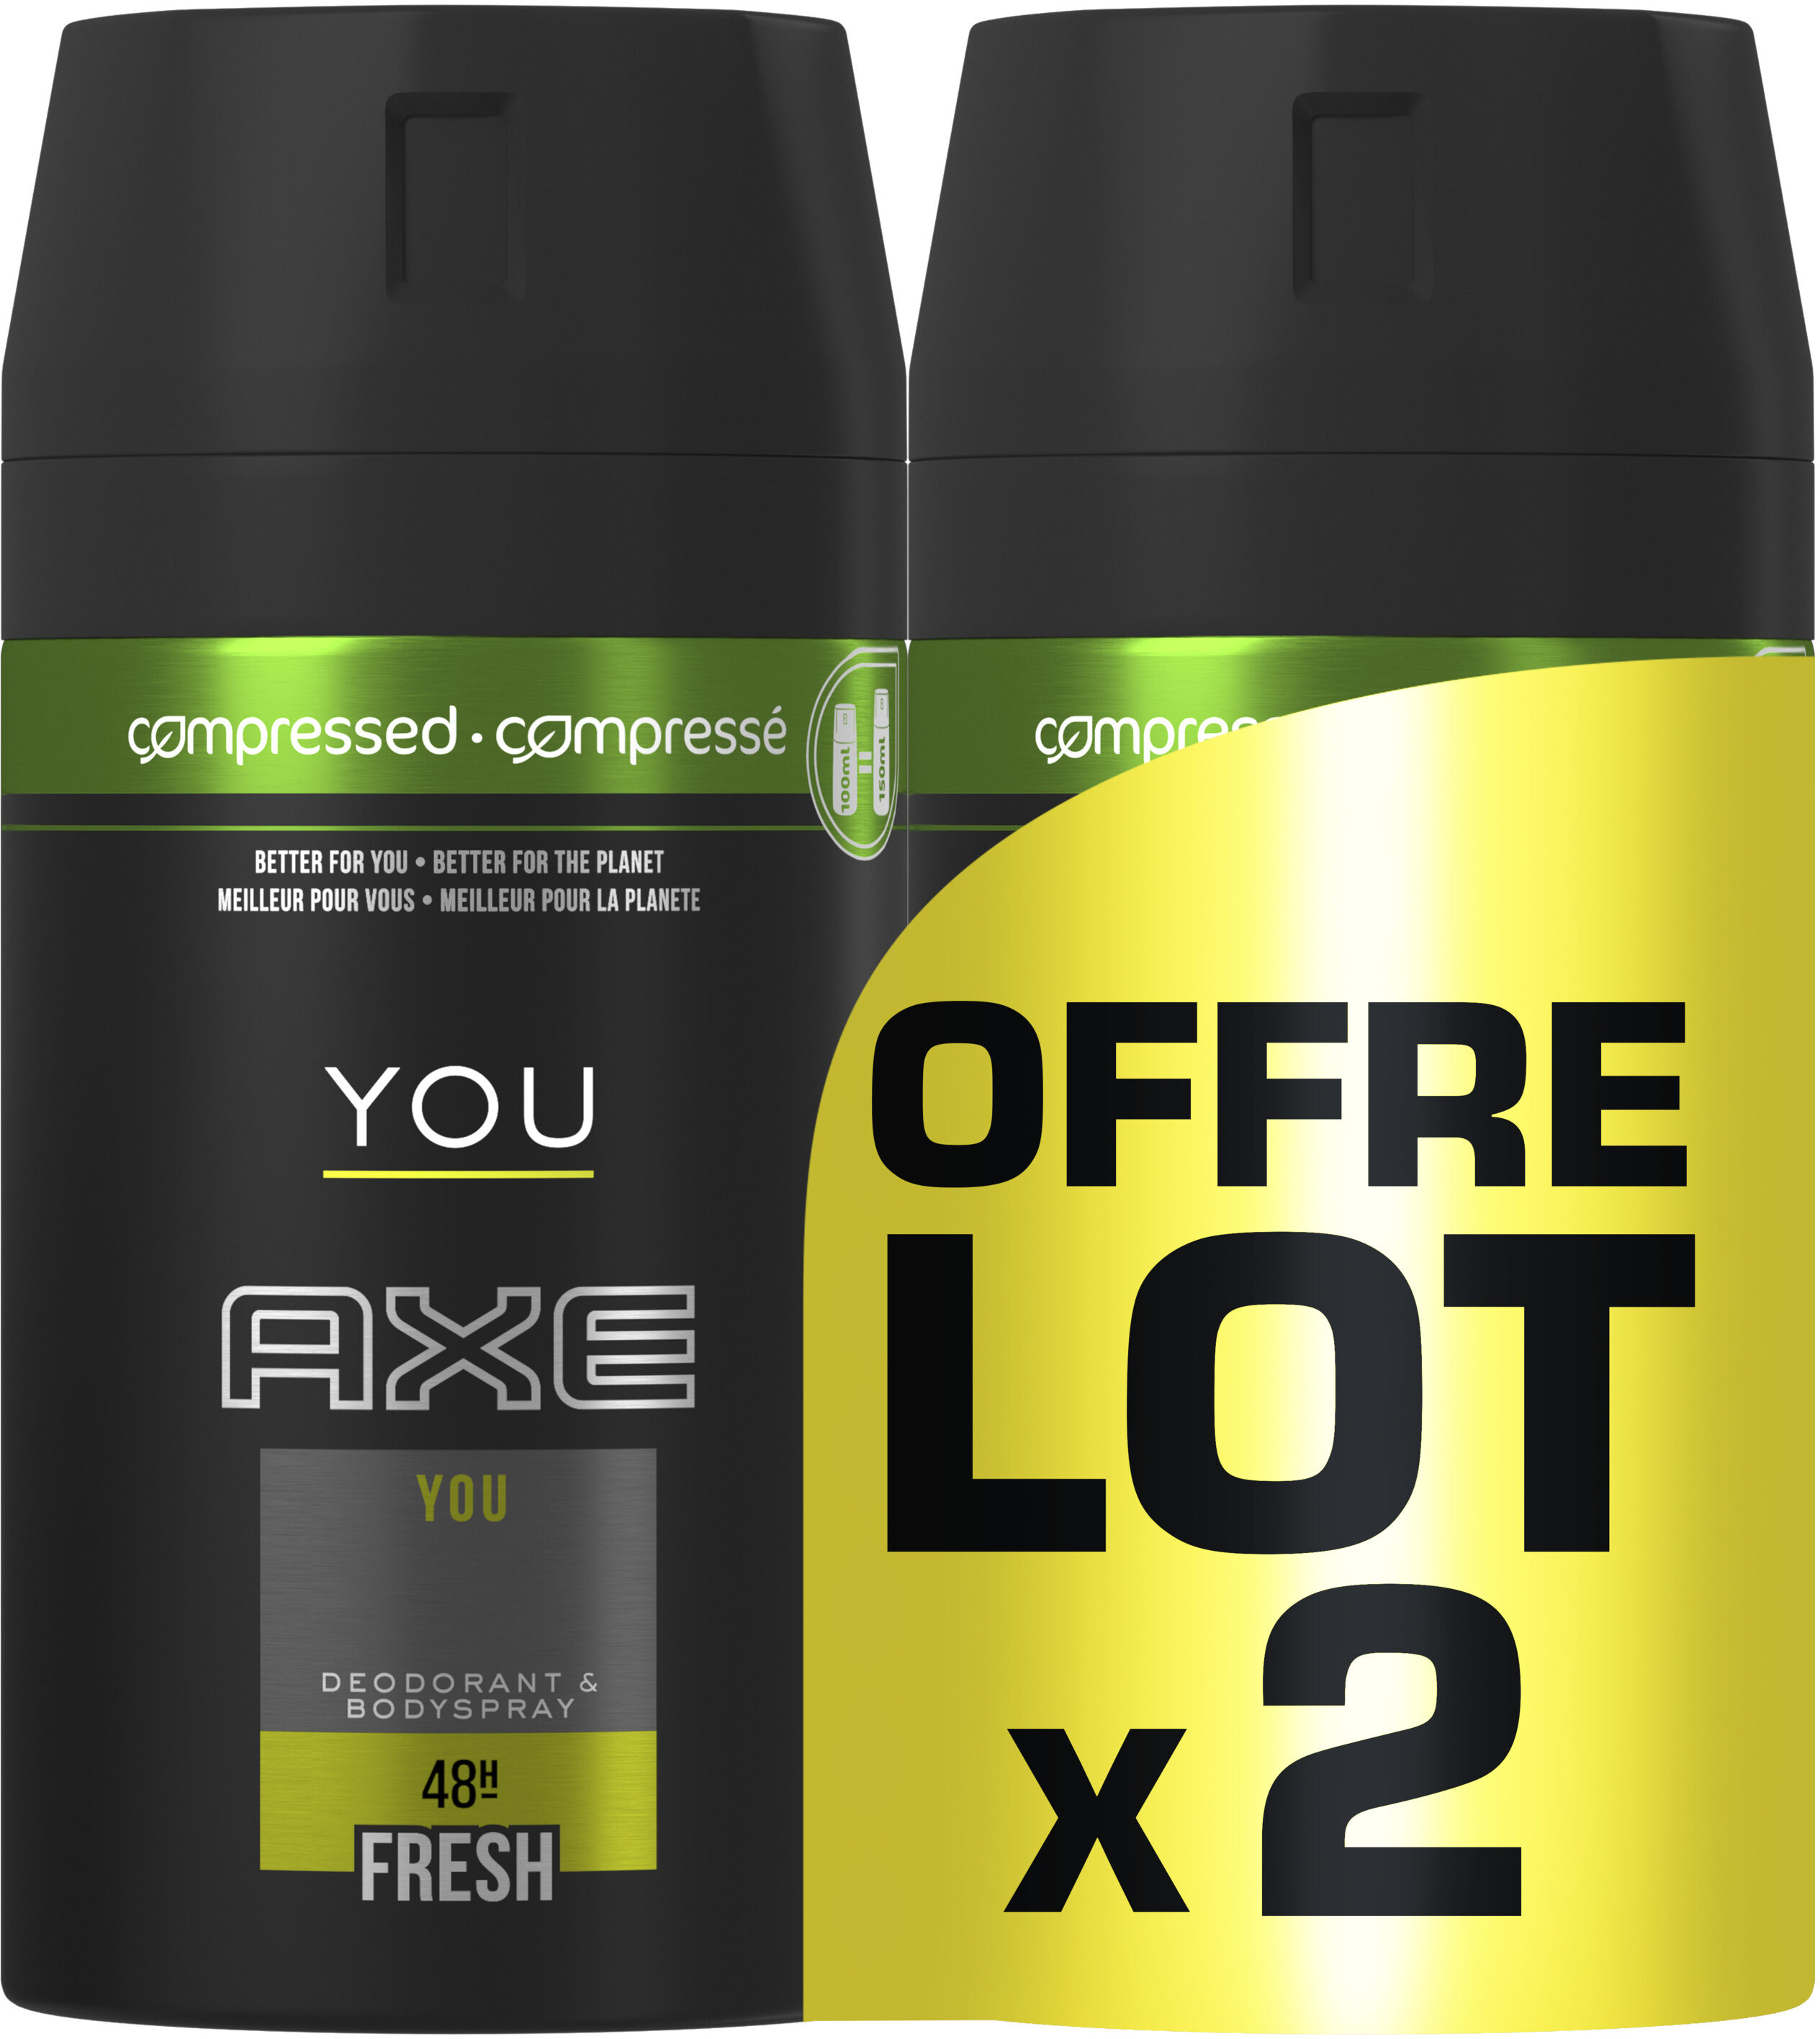 AXE Déodorant Anti Bactérien You Spray Compressé Lot de 2x100ml - Product - fr